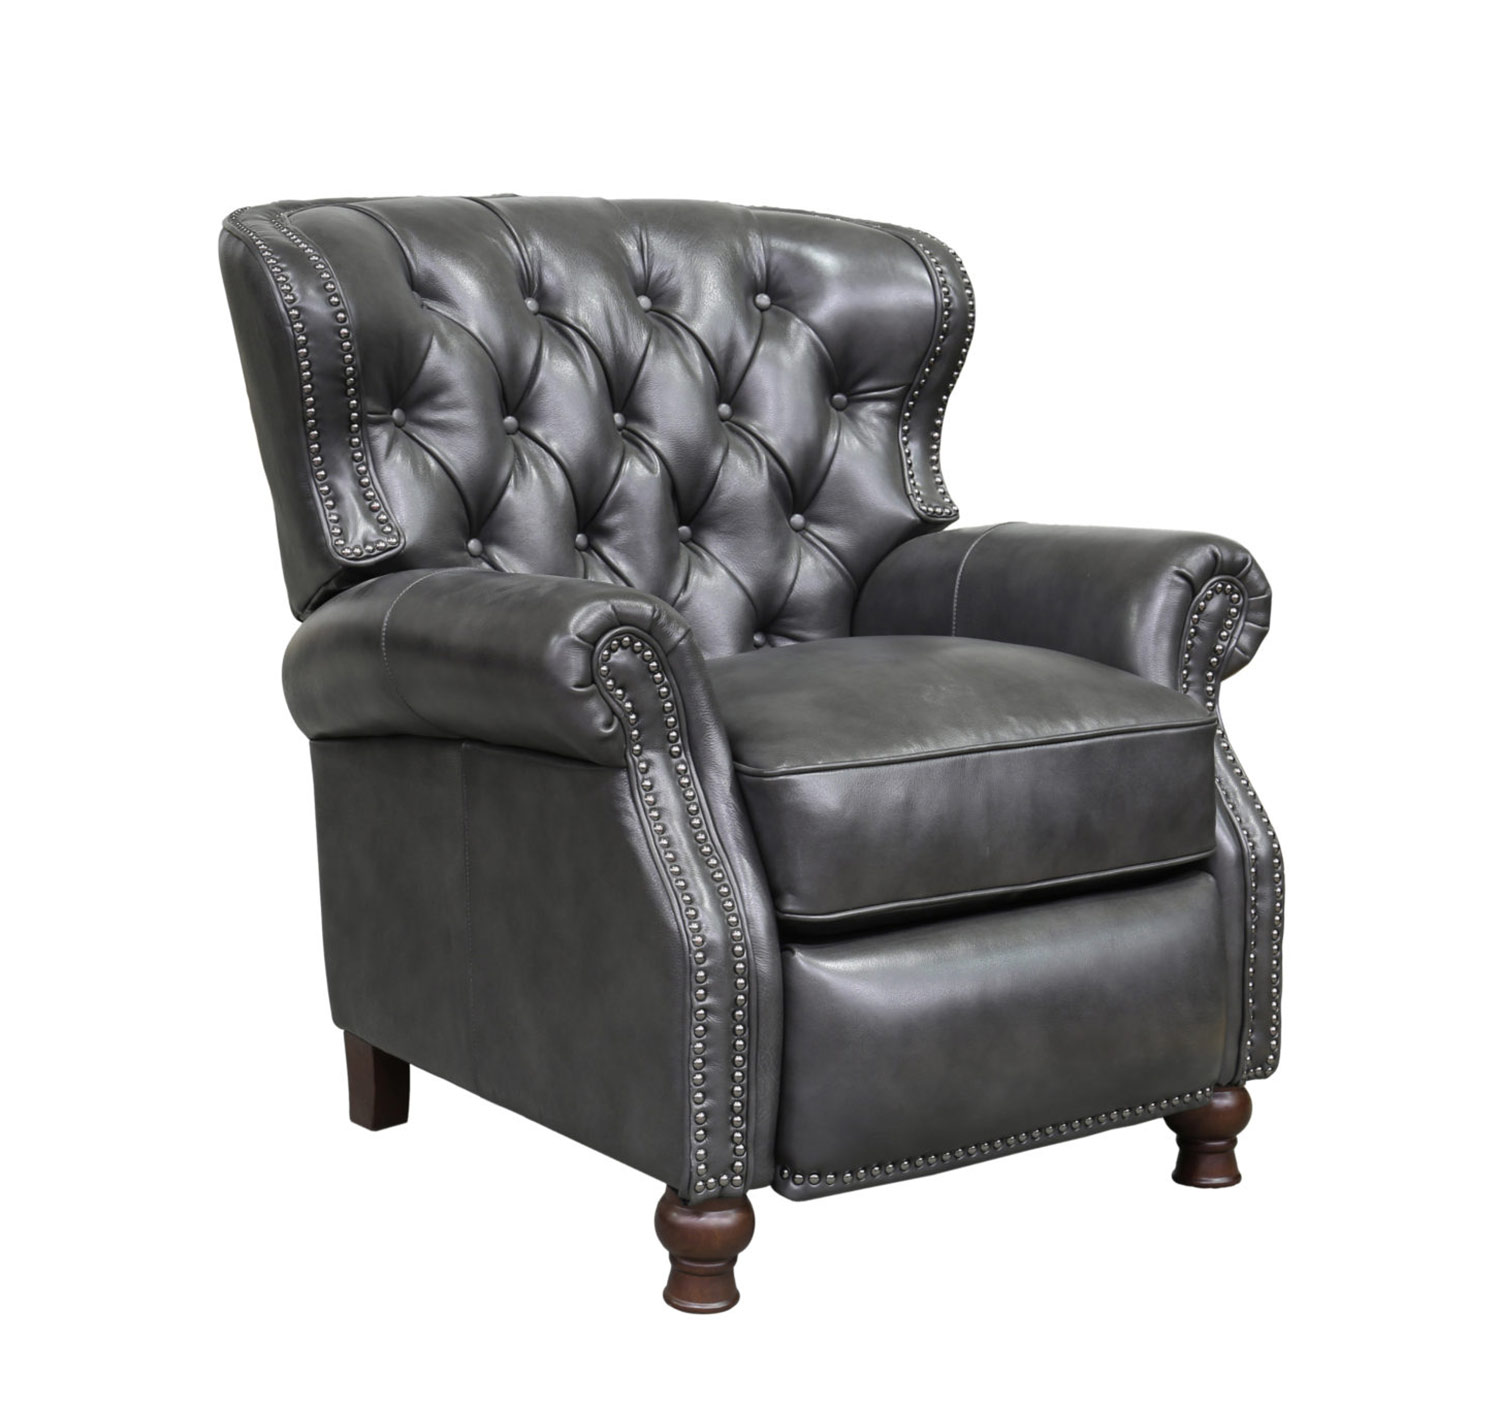 Barcalounger Presidential Recliner Chair - Wrenn Gray/all leather